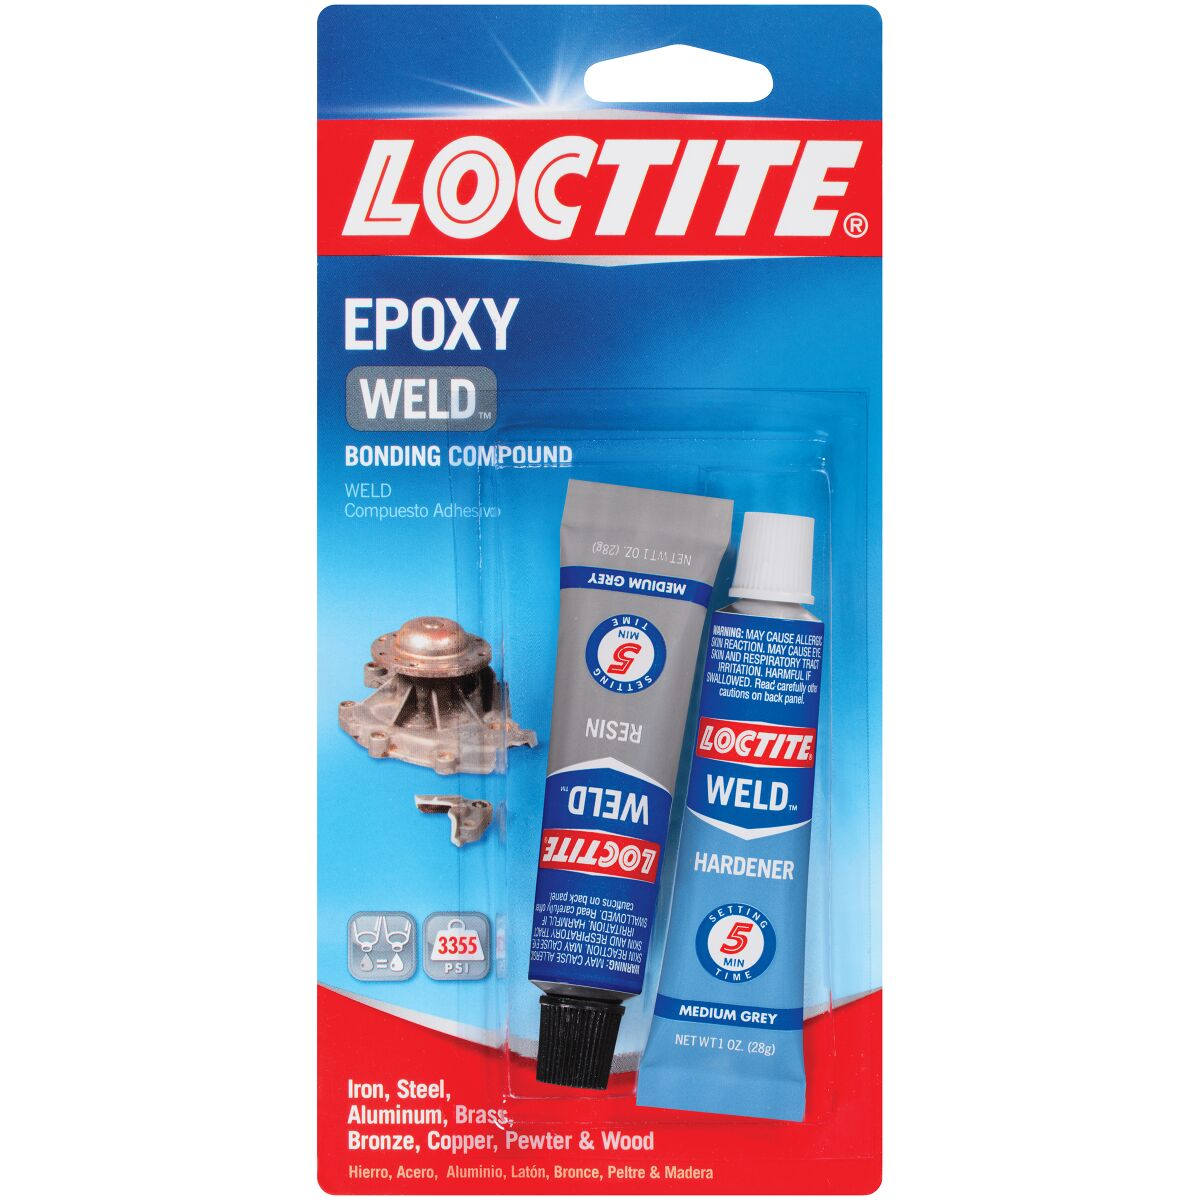 Loctite Epoxy Weld